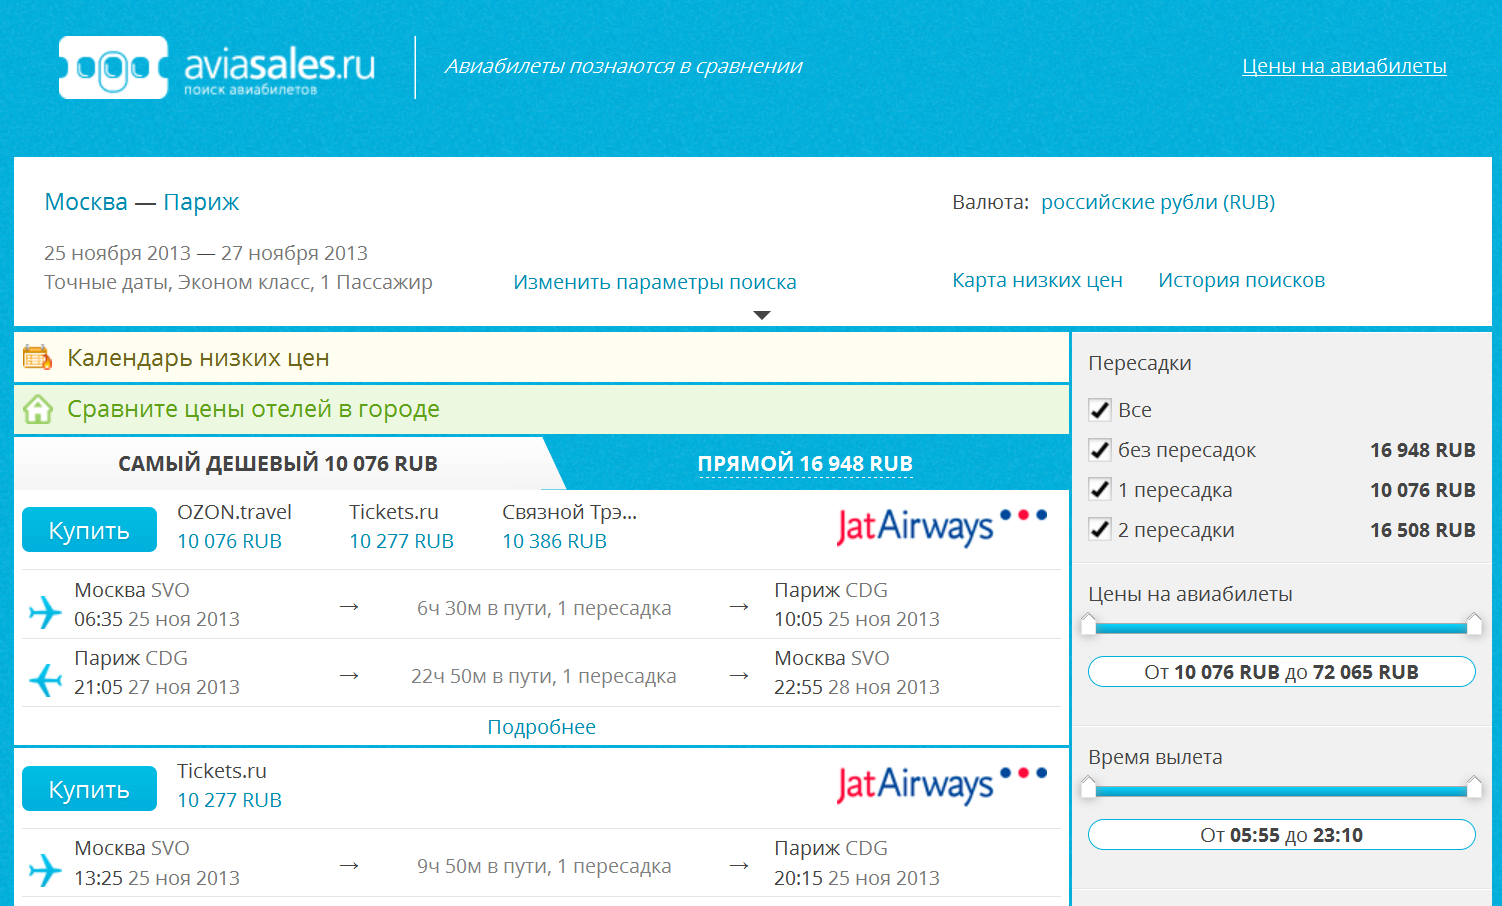 Авиа sales купить билеты на самолет онлайн москва ижевск авиабилеты бизнес класс